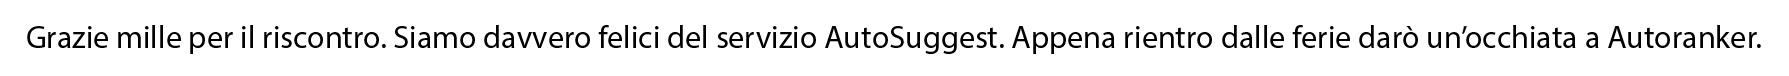 AutoSuggest.net recensioni dei clienti